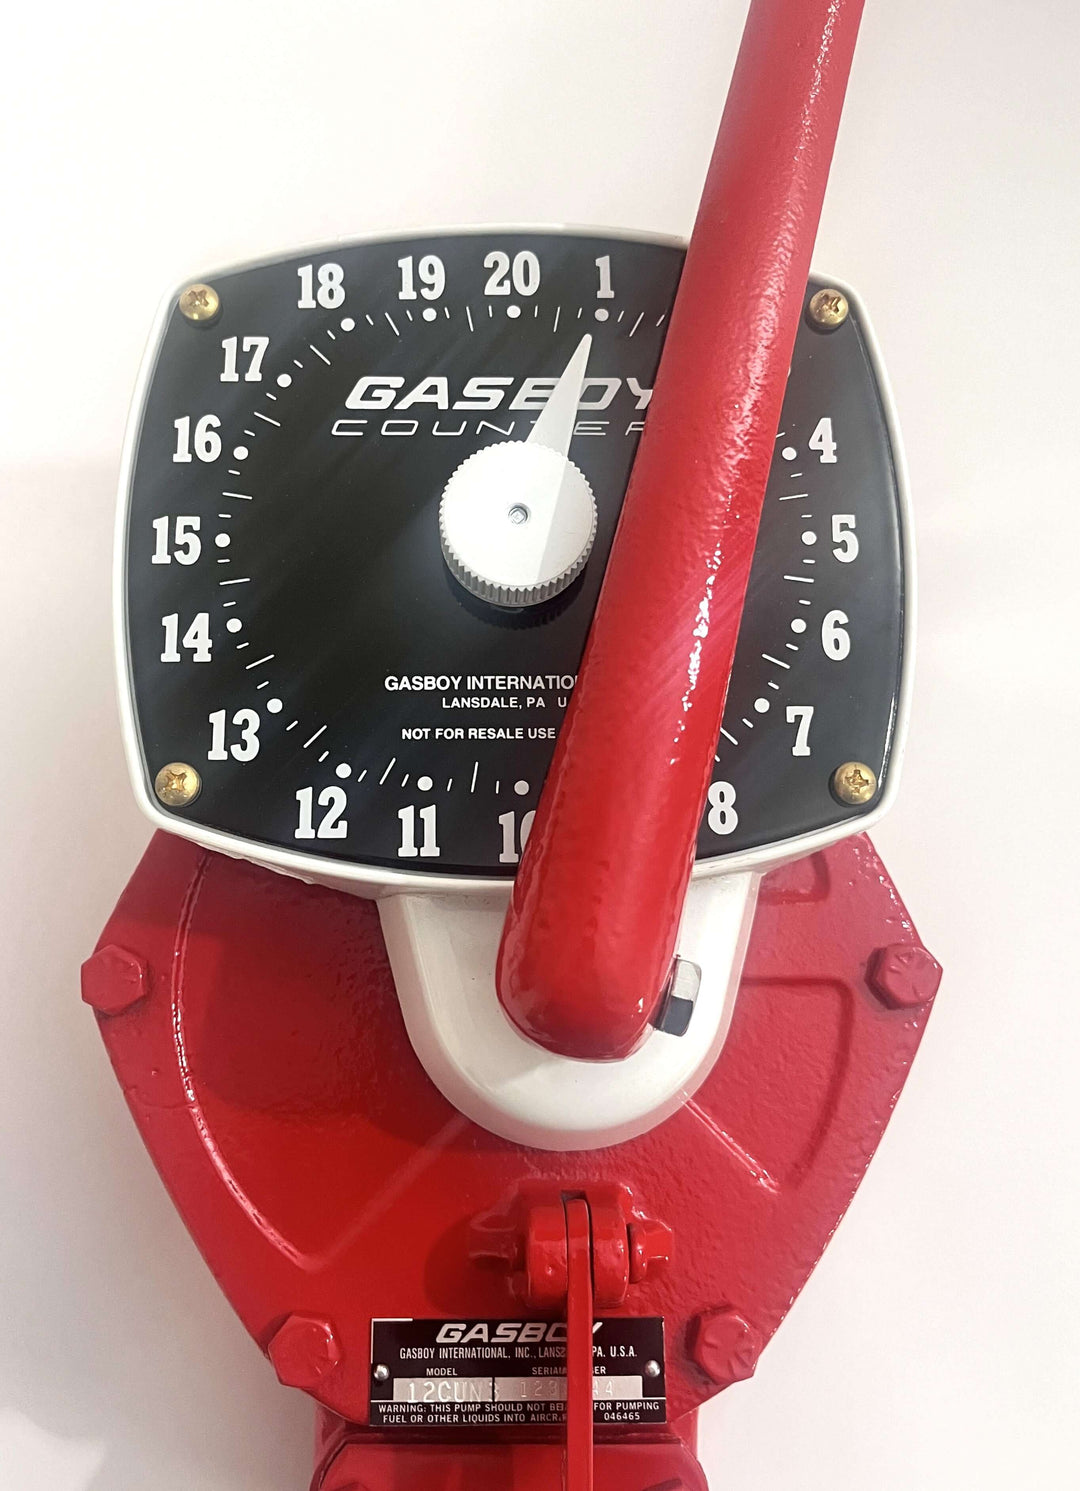 Gasboy Series 1200 Hand Rotary Pump